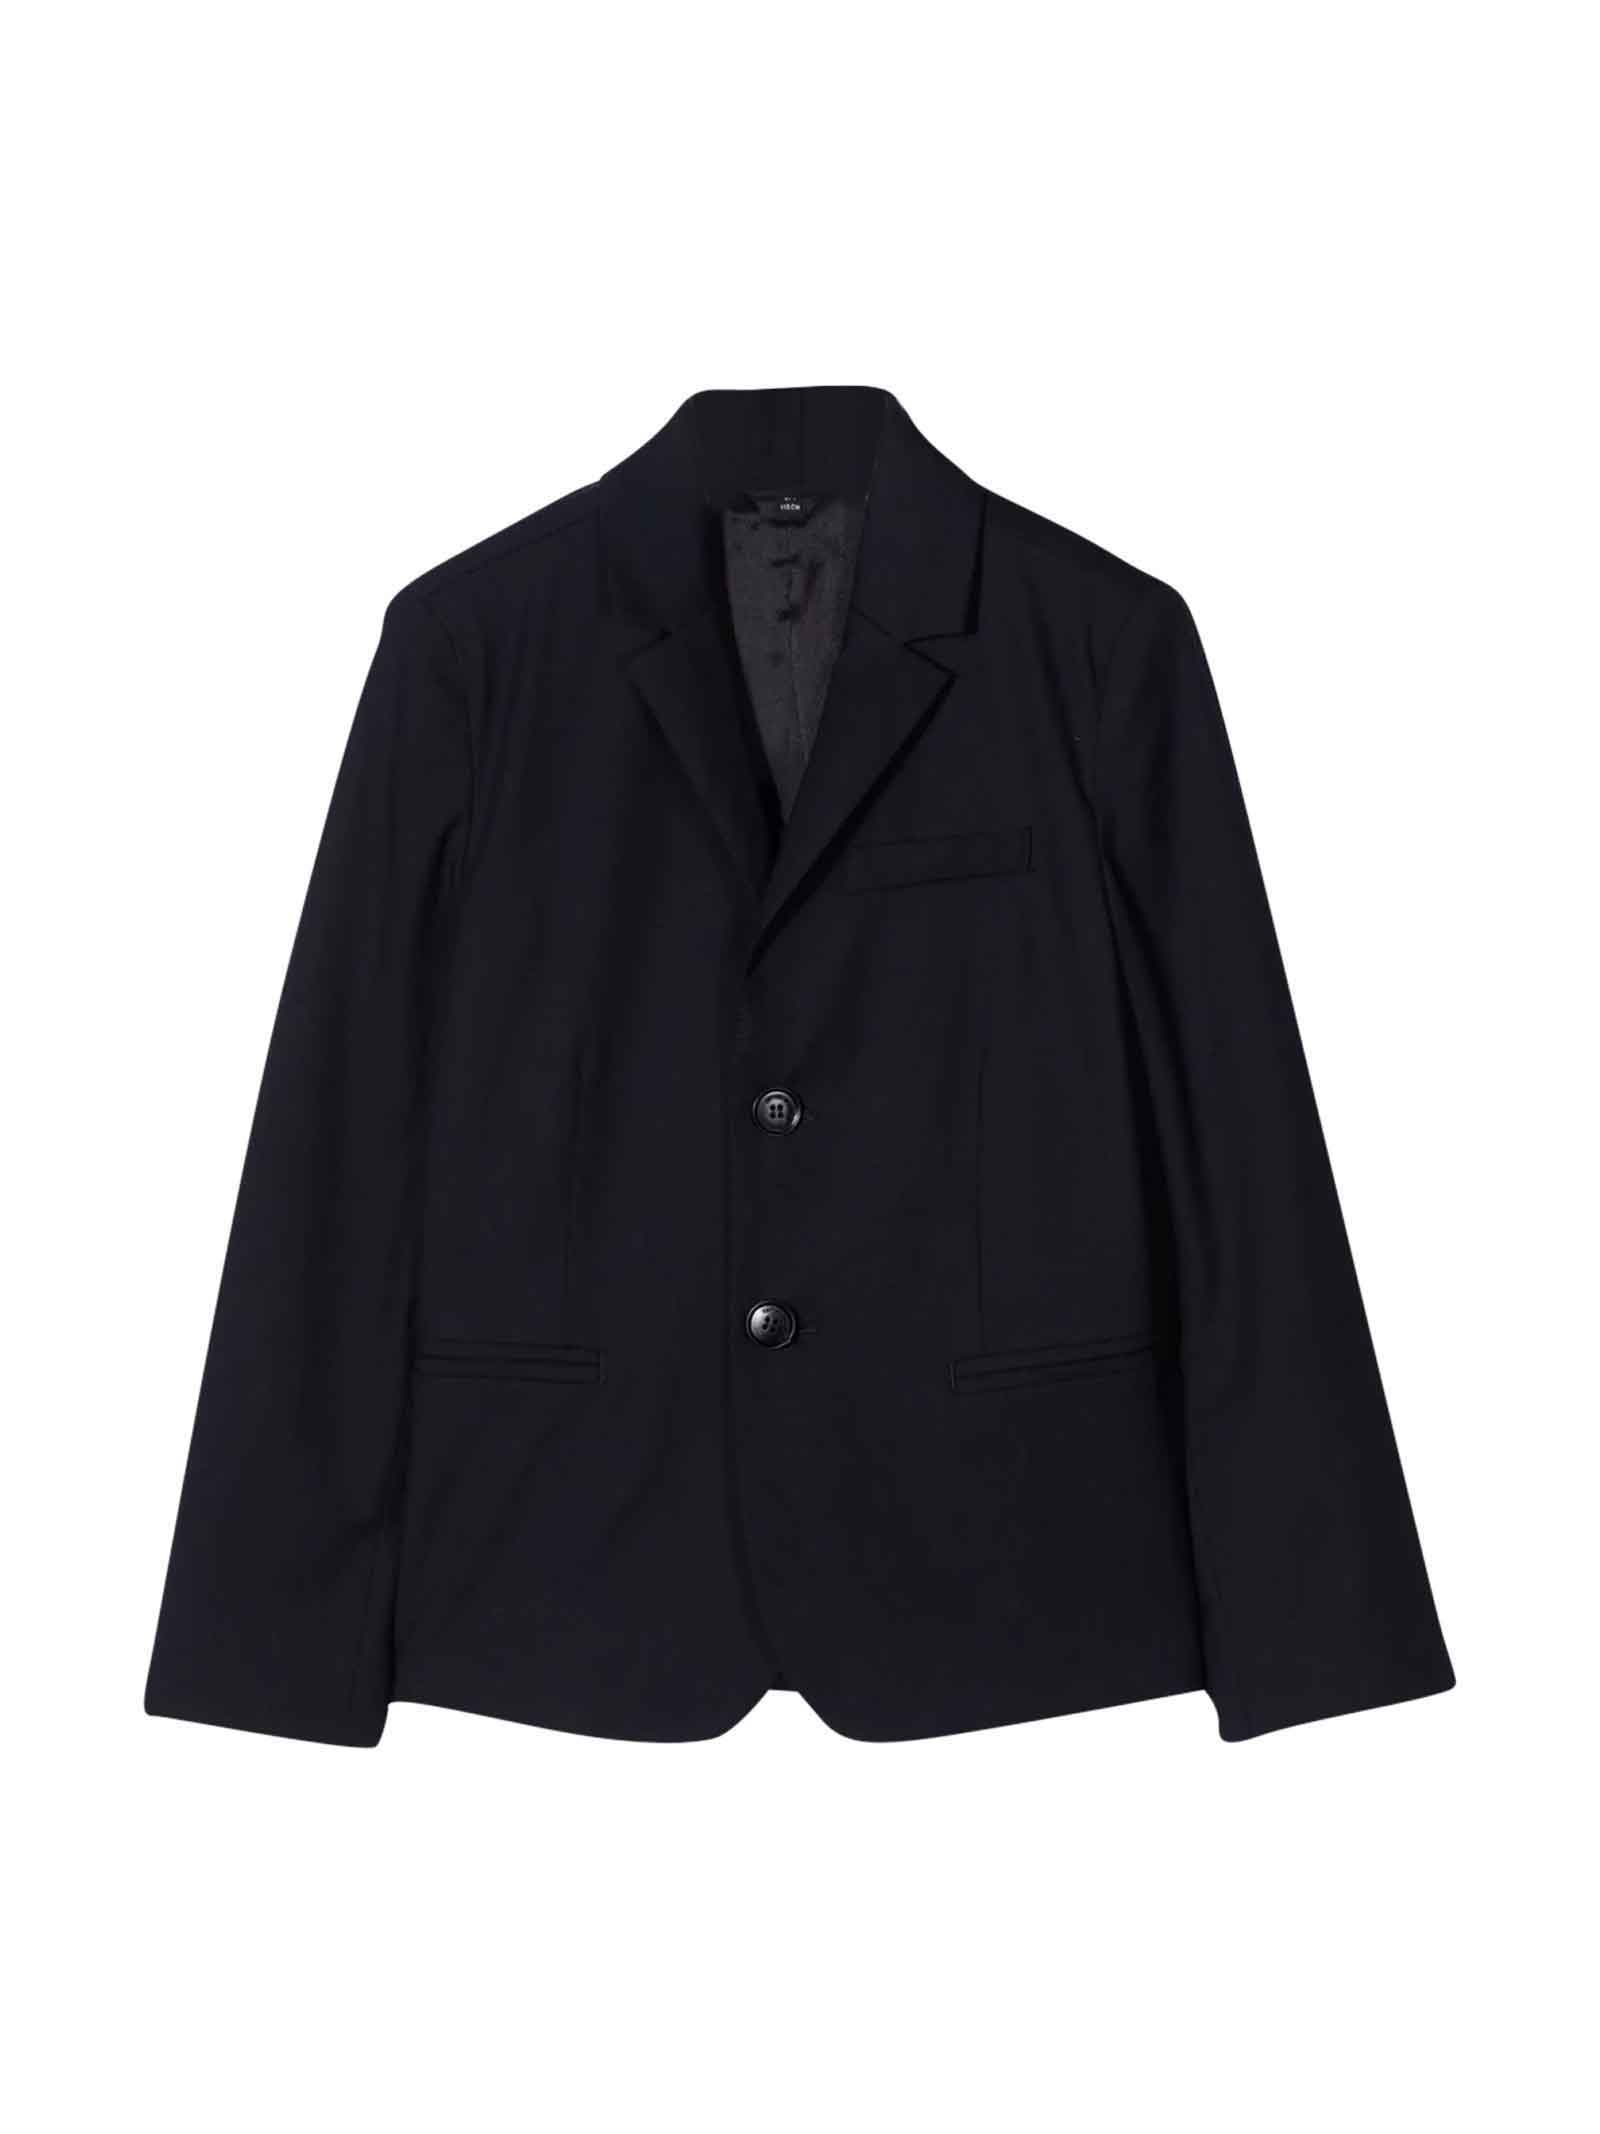 Emporio Armani Black Blazer With Frontal Pocket